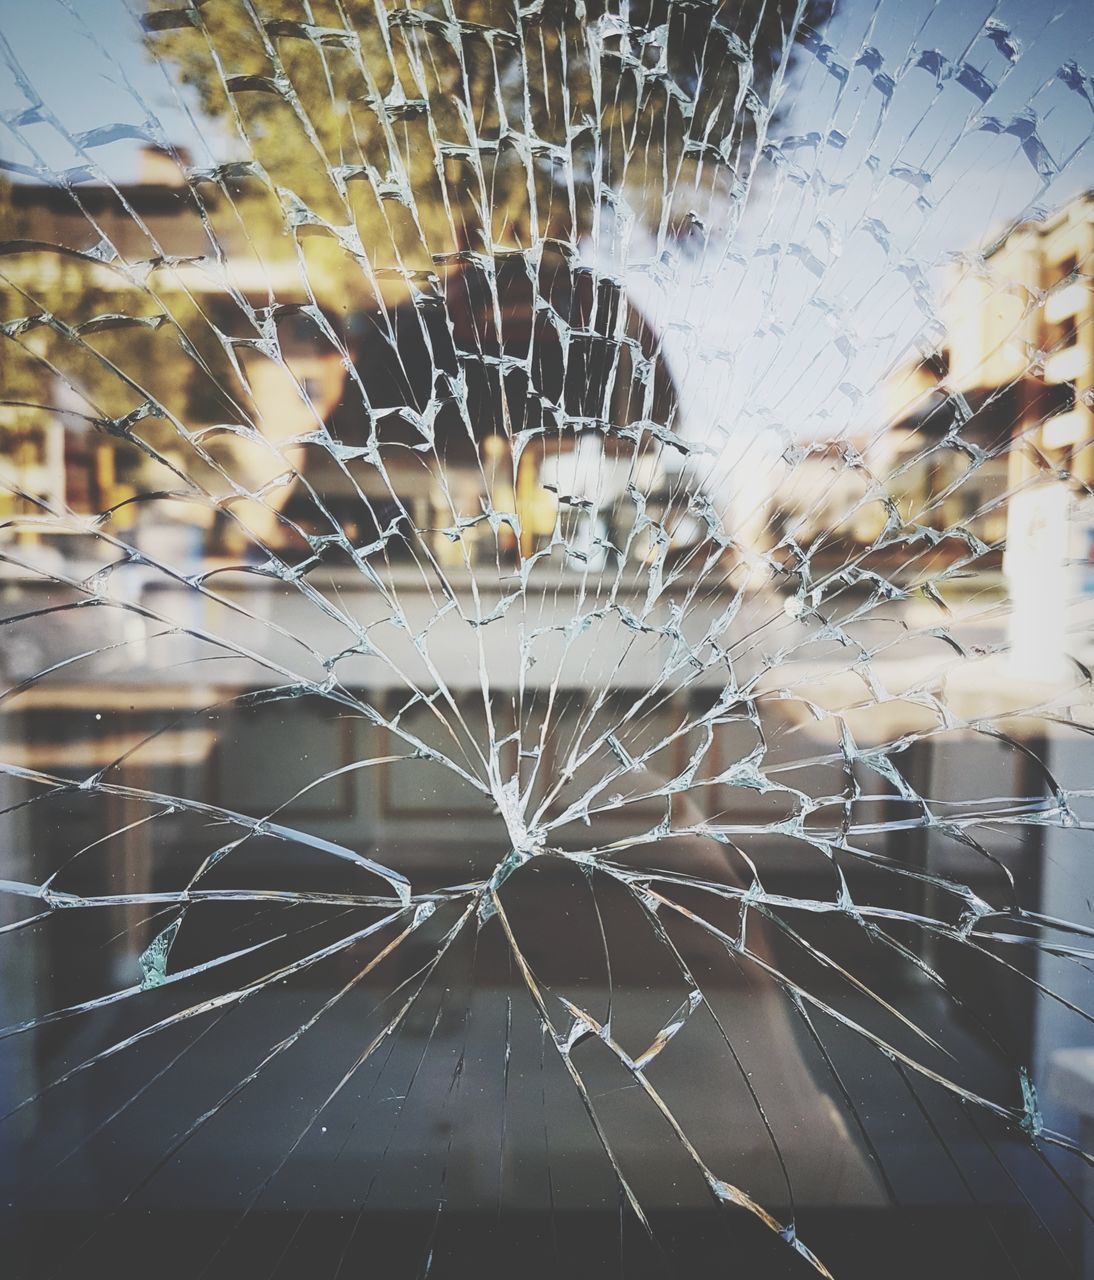 window, close-up, spider web, shattered glass, fragility, no people, backgrounds, web, indoors, full frame, destruction, day